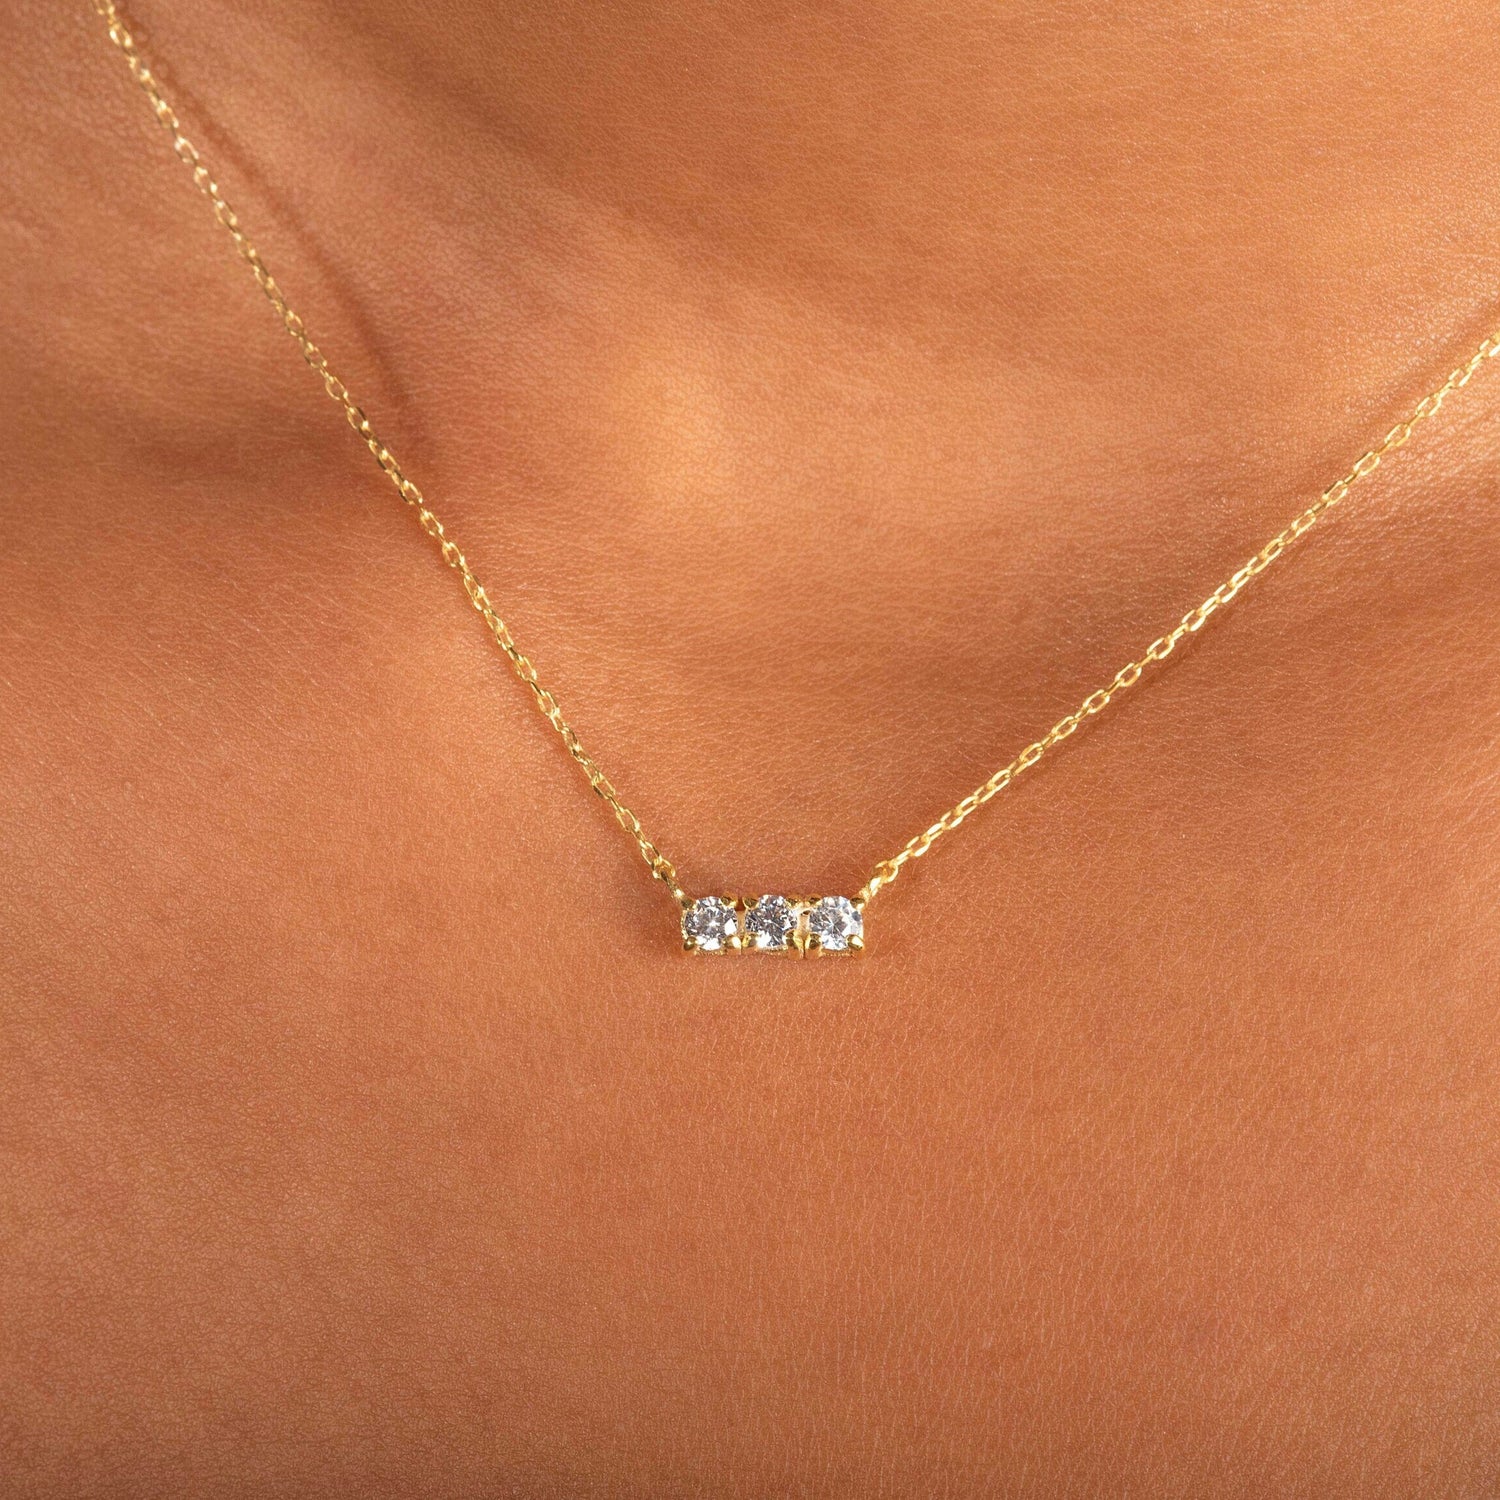 Classic Trio Diamond Necklace / 14k Gold Diamond Necklace 0.18 Ctw / 14K Solid Gold Trio Stone Diamond Necklace / Mothers Day Sale